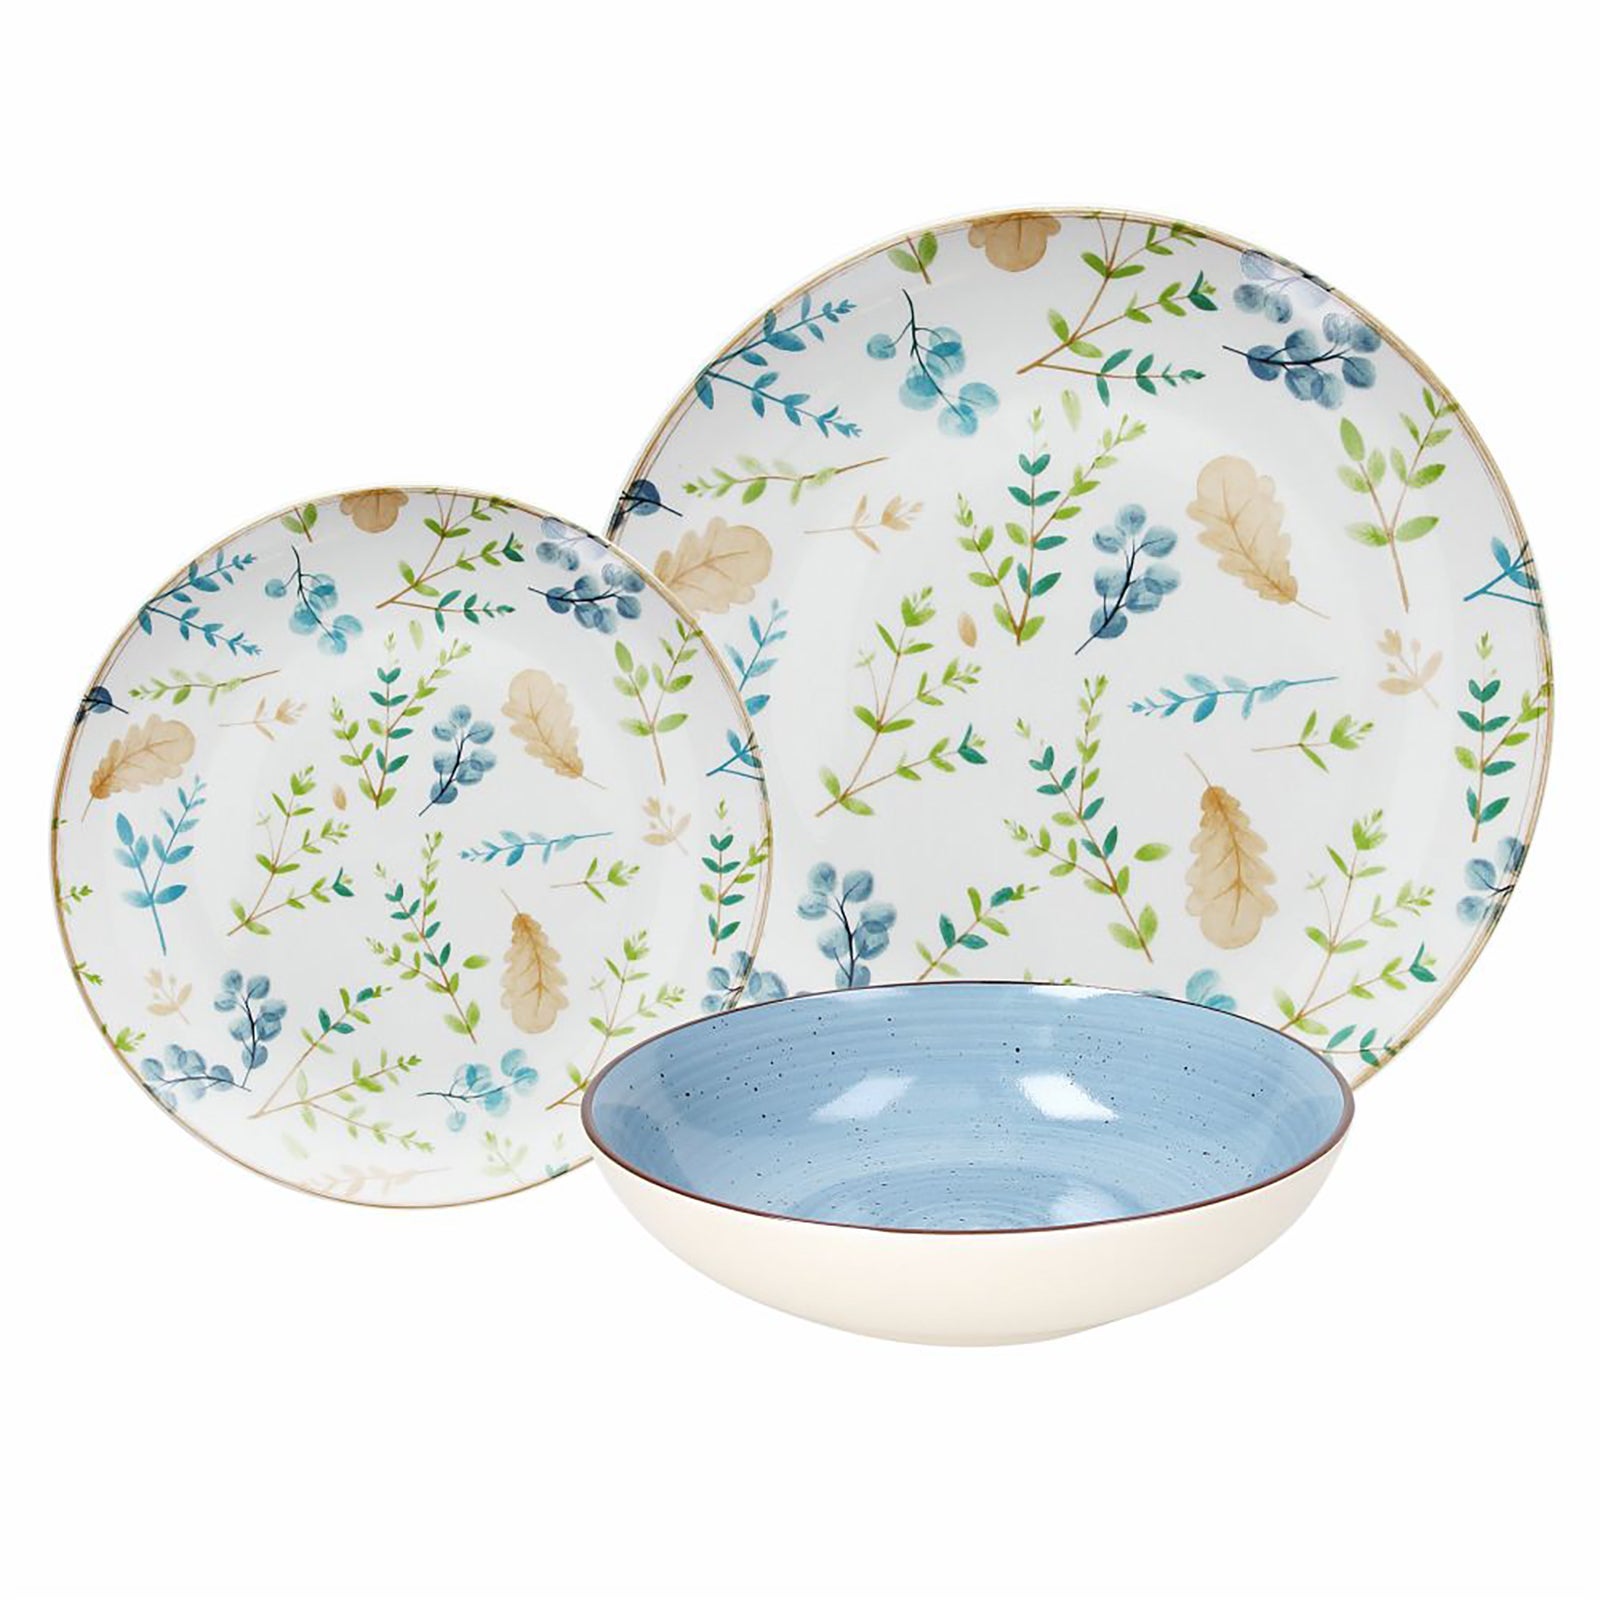 Floral Gaia 18pc Porcelain Dinnerware Set, White/blue, Serving For 6